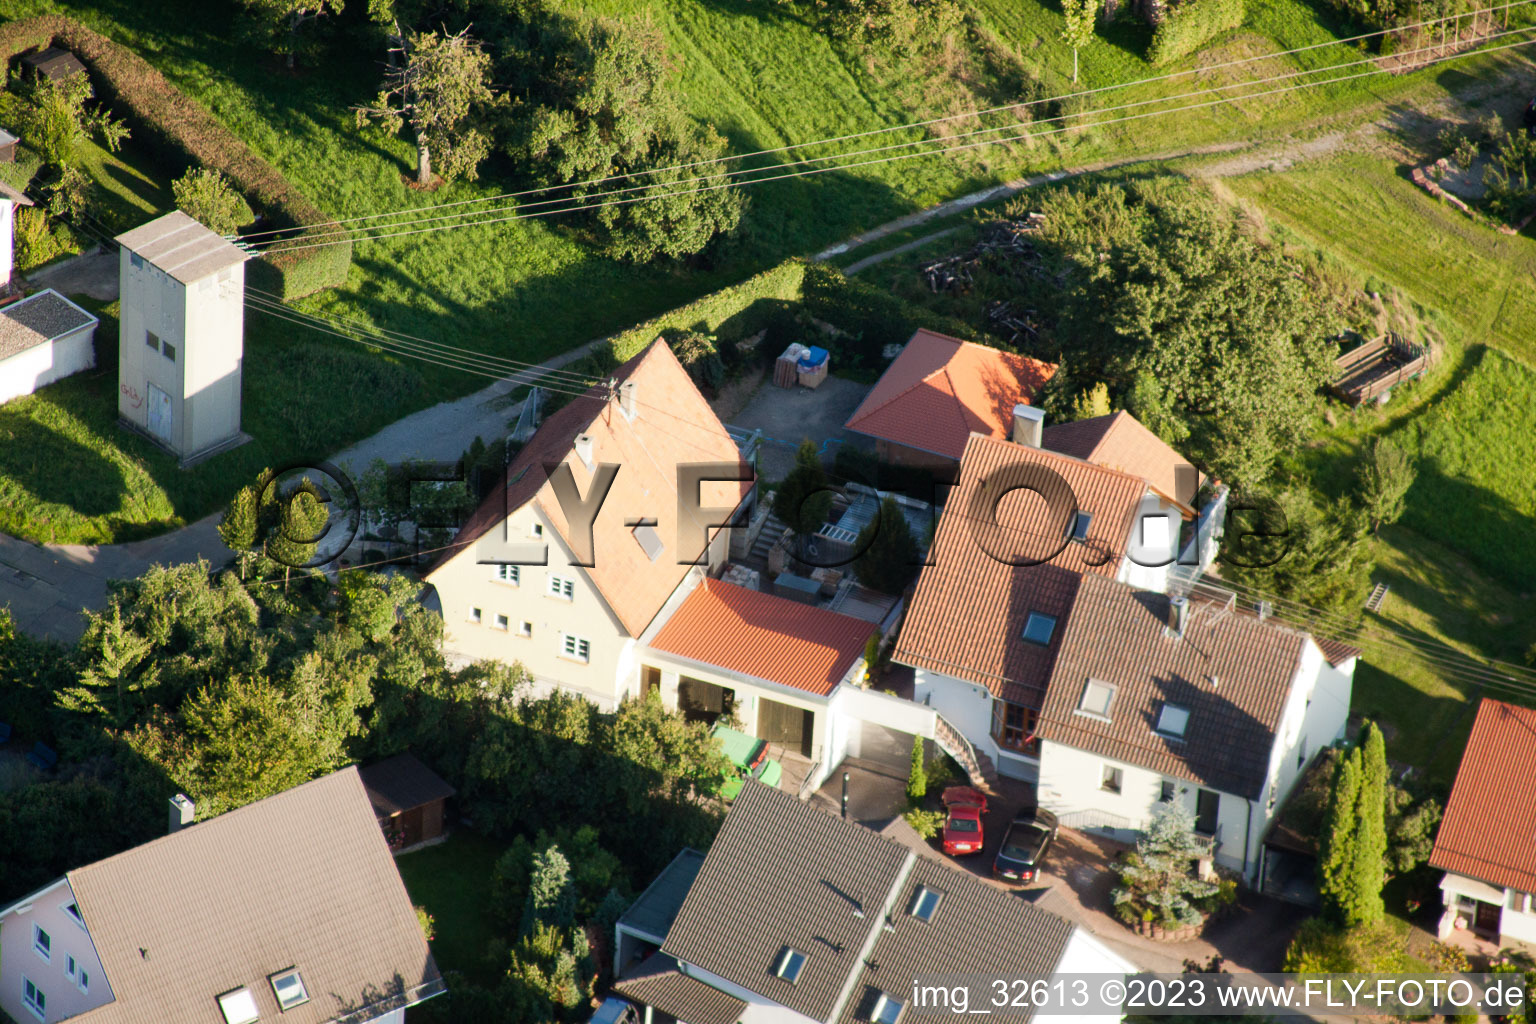 Drone image of Gräfenhausen in the state Baden-Wuerttemberg, Germany